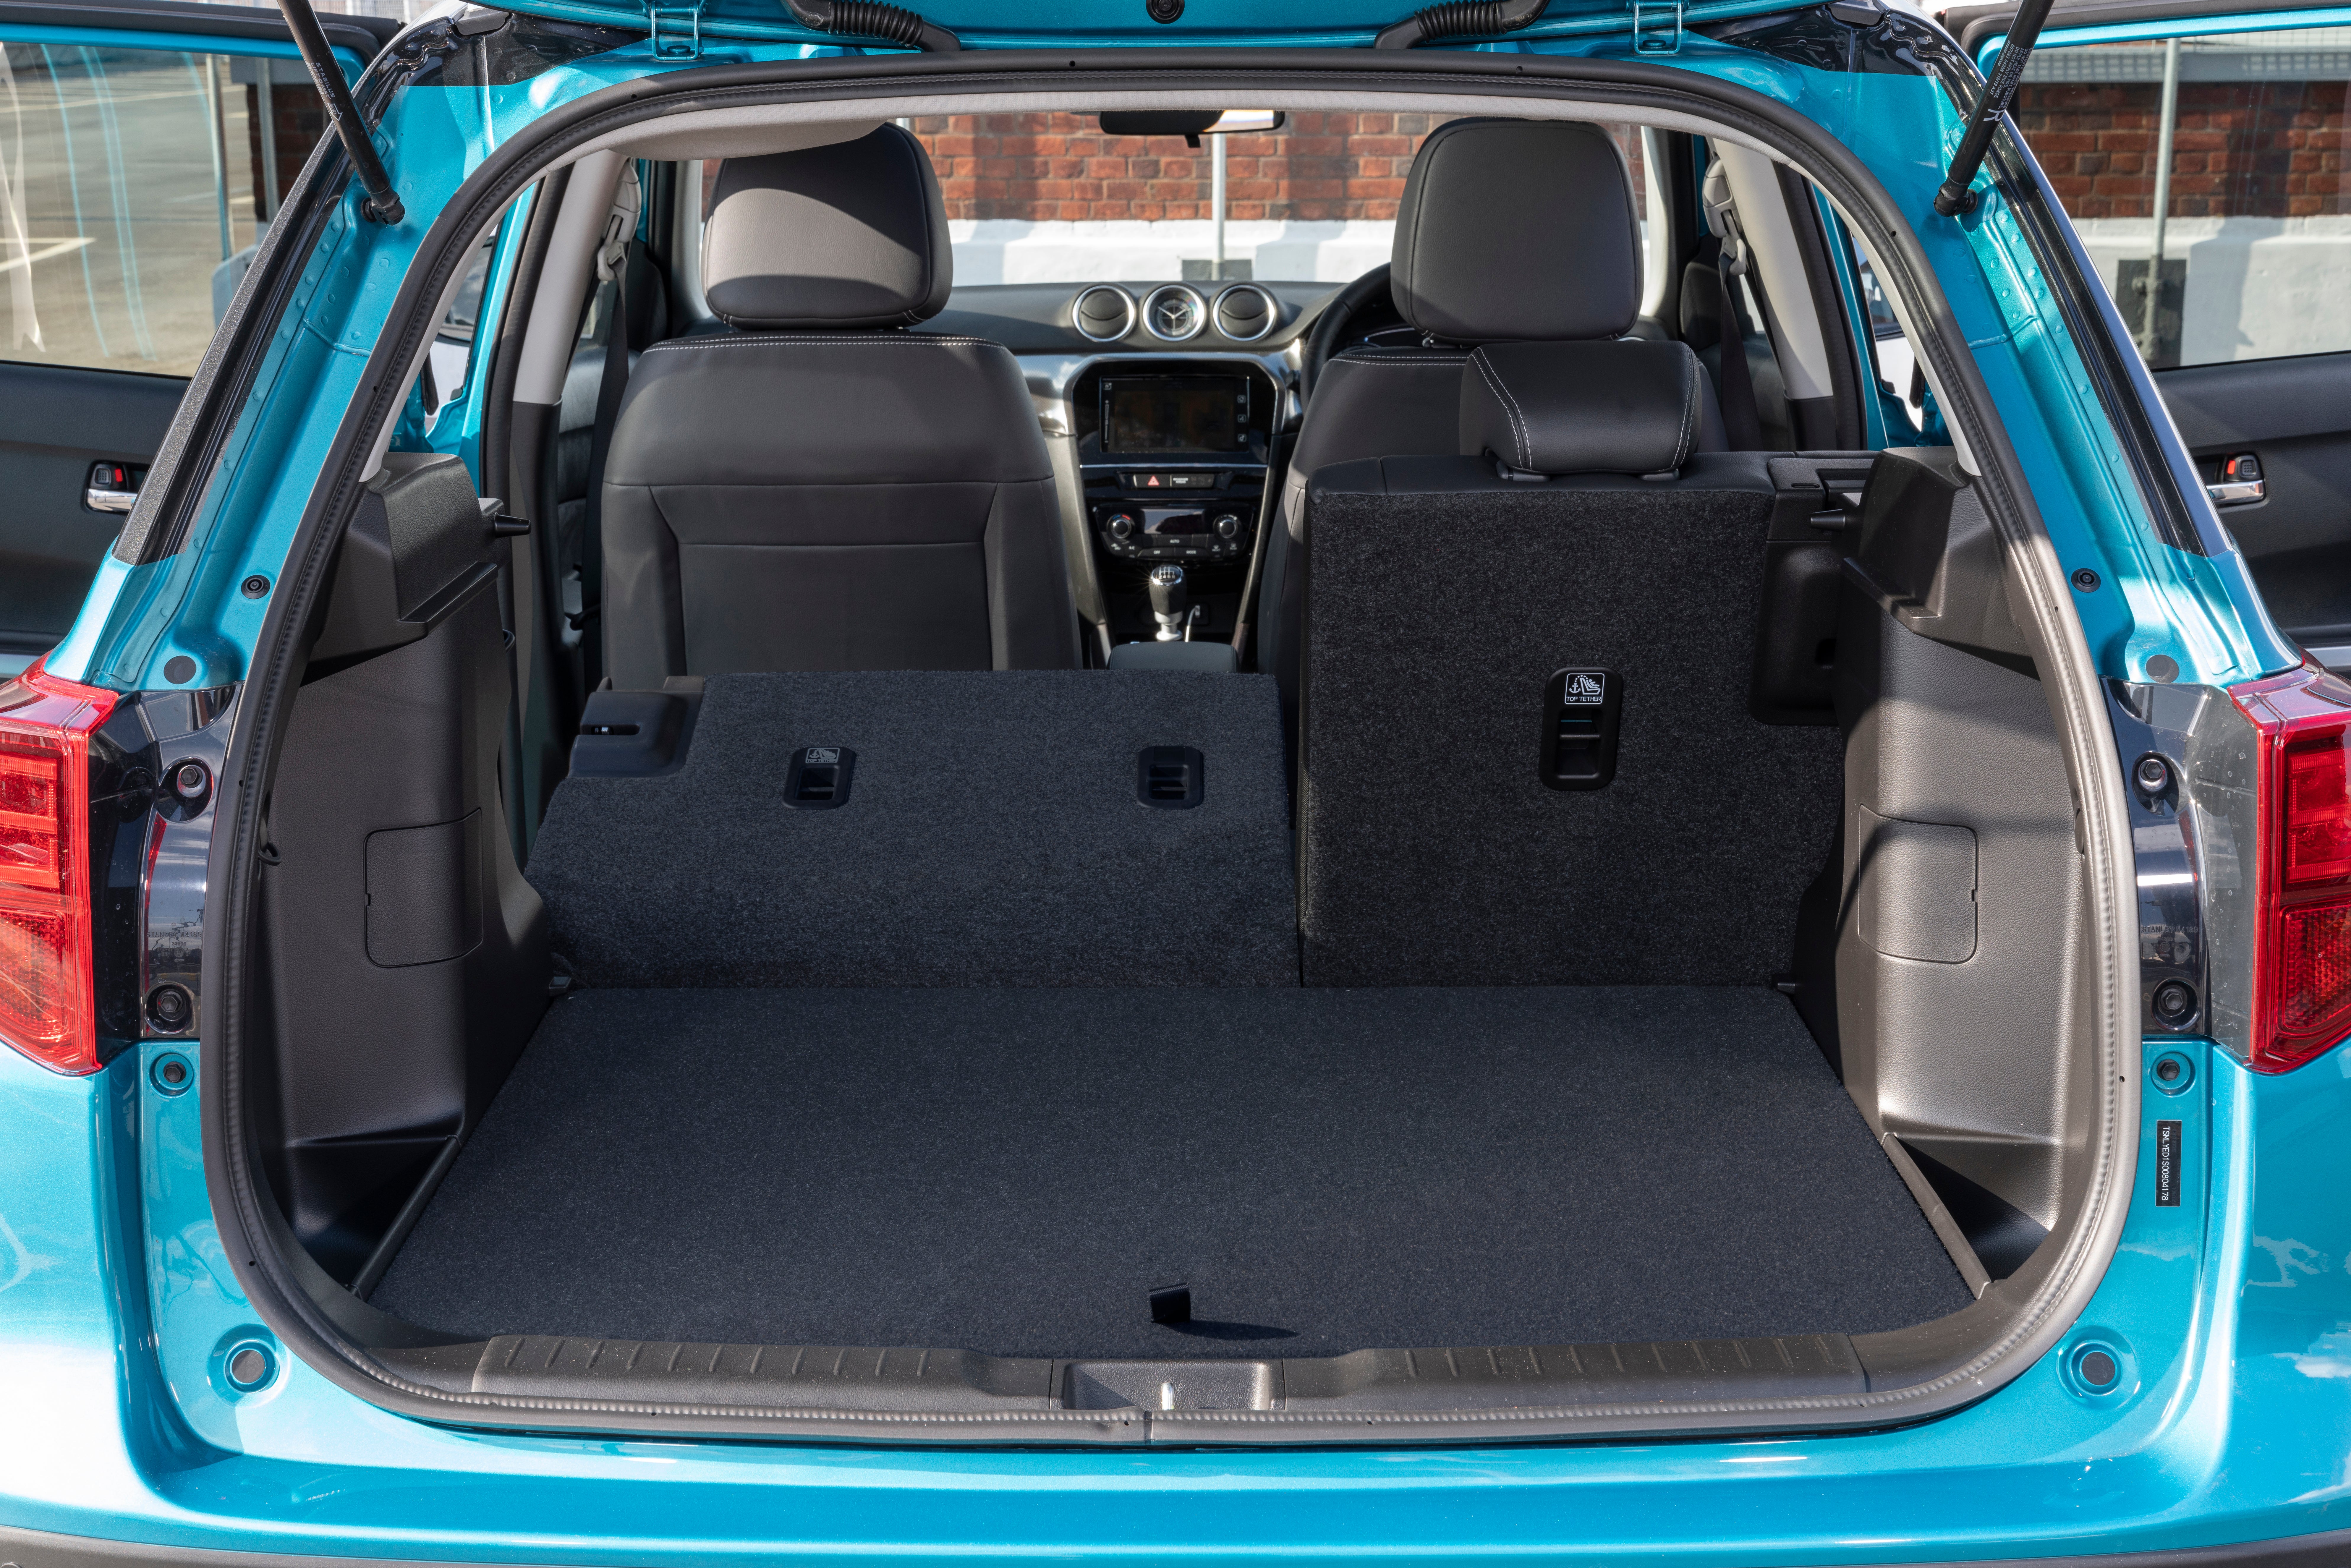 Suzuki Vitara Review 2022 boot space, seats folded